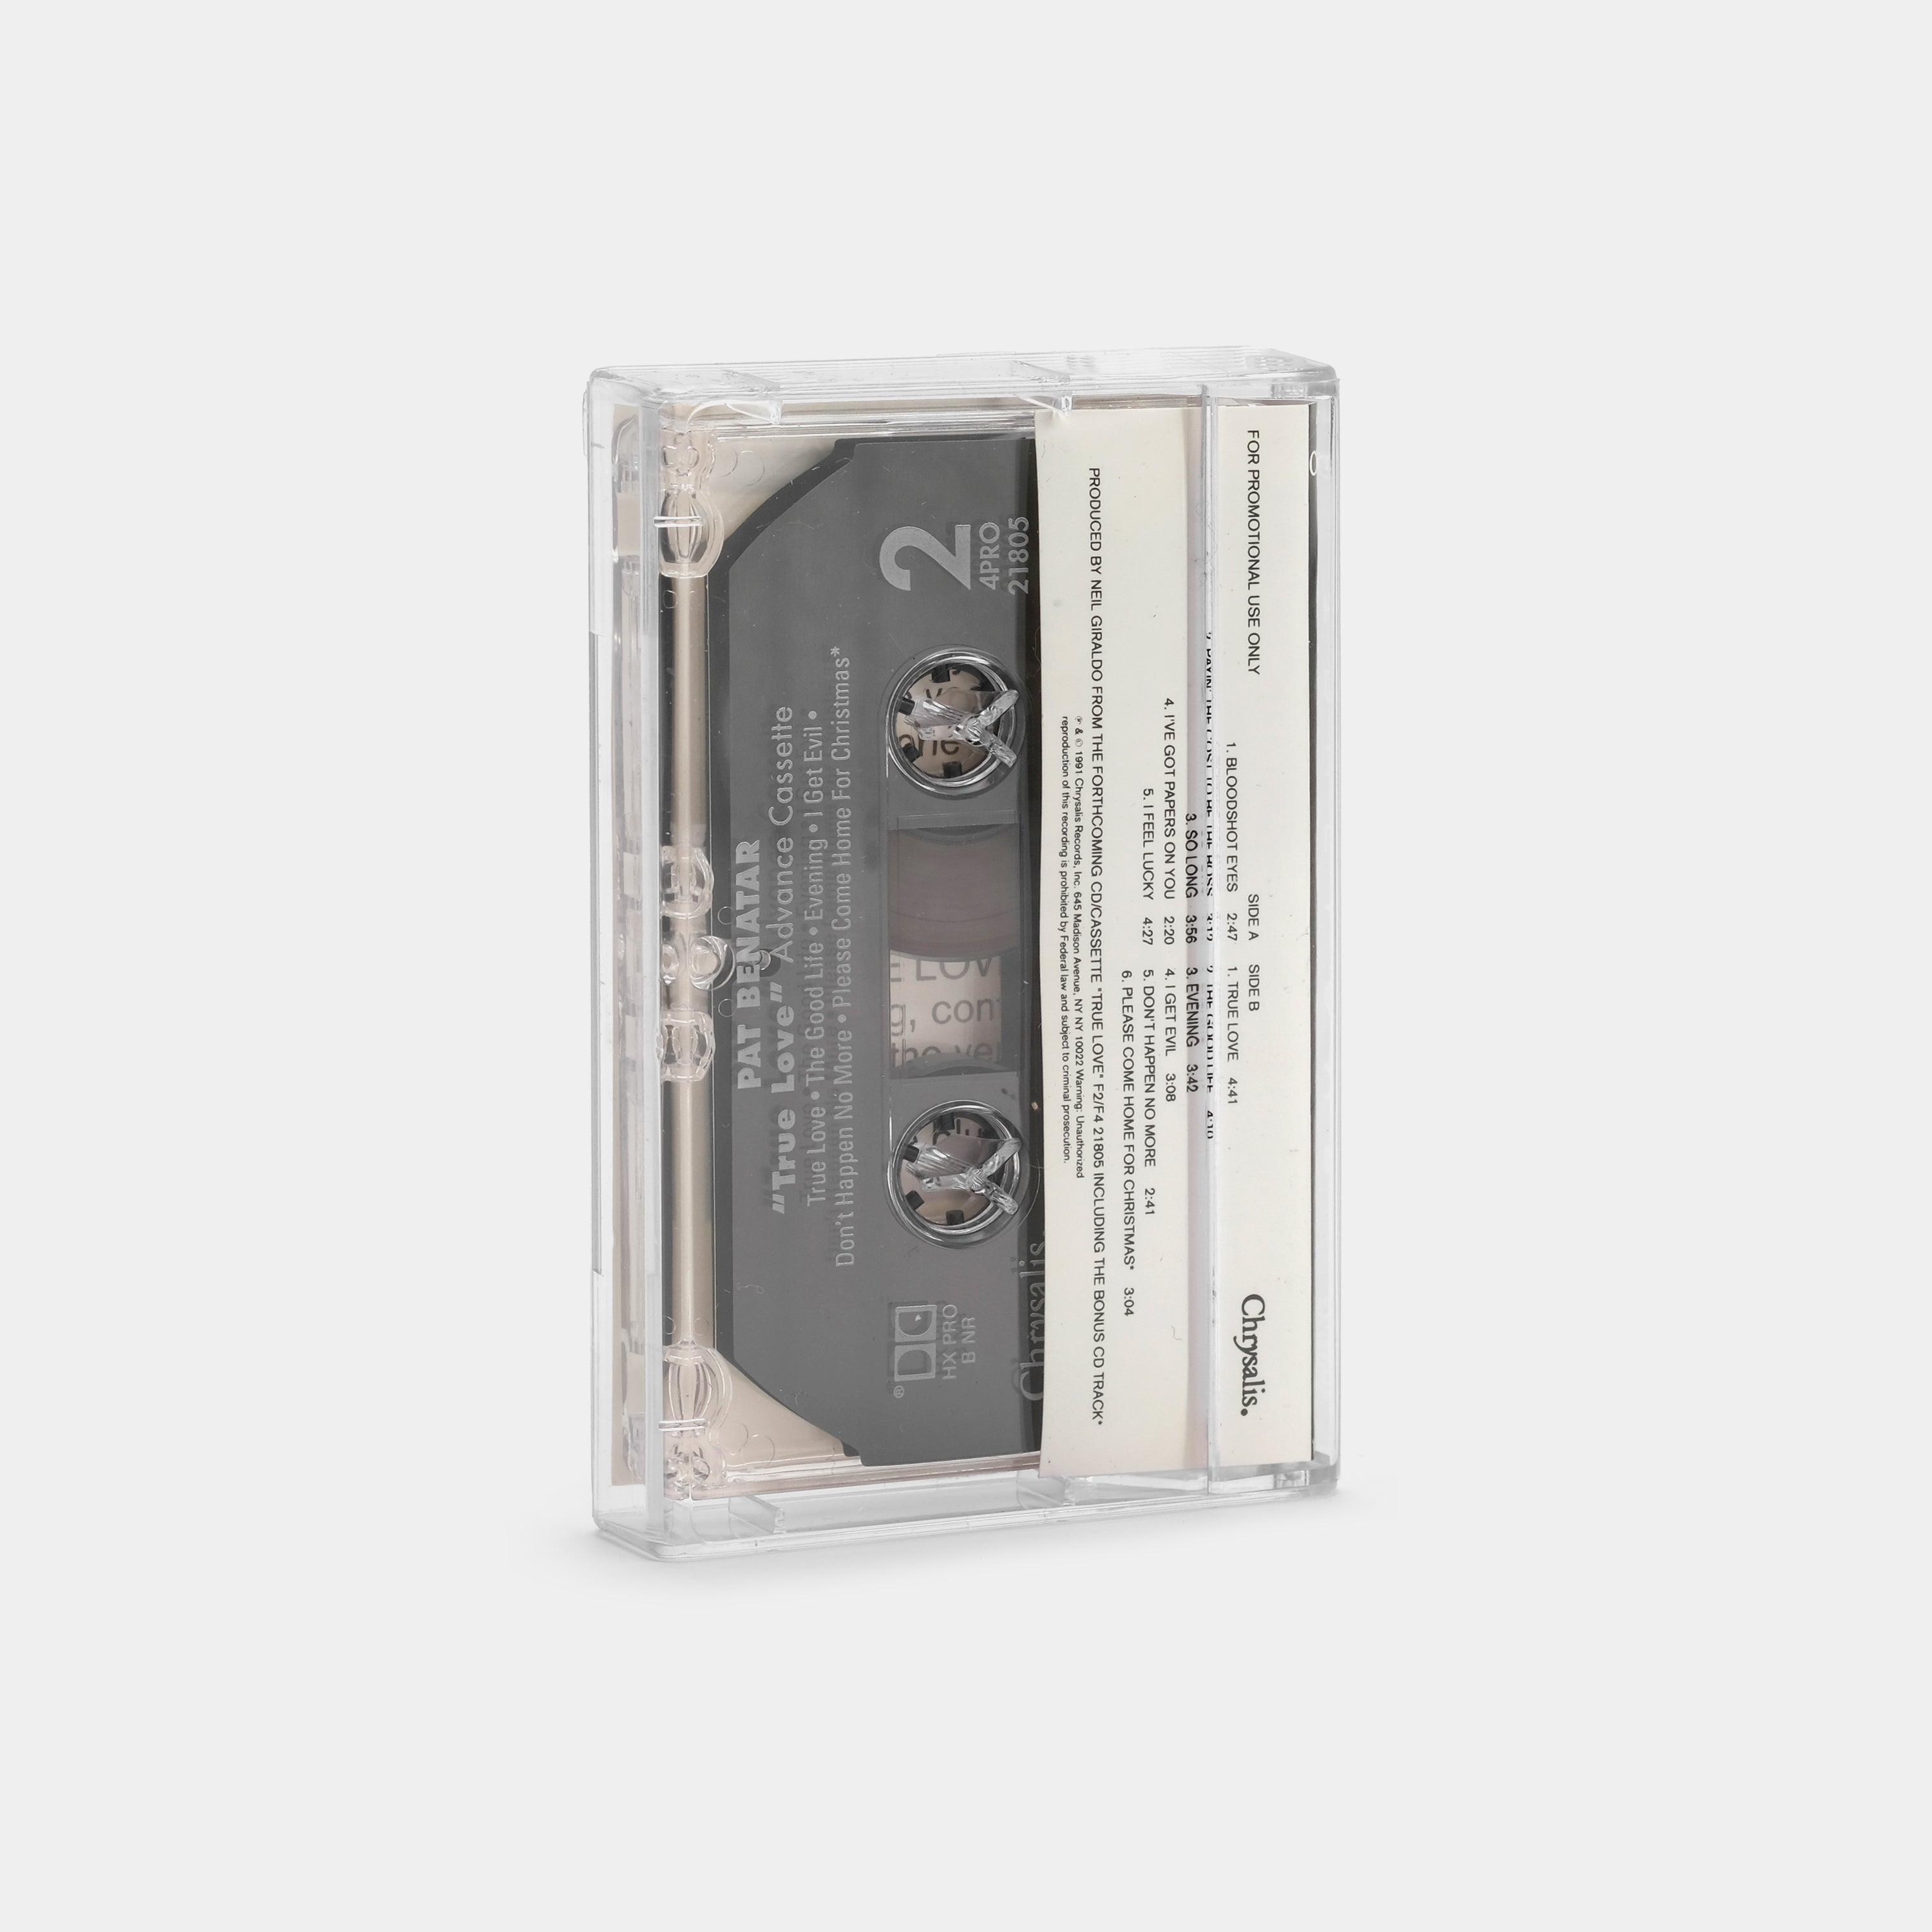 Pat Benatar - True Love Cassette Tape